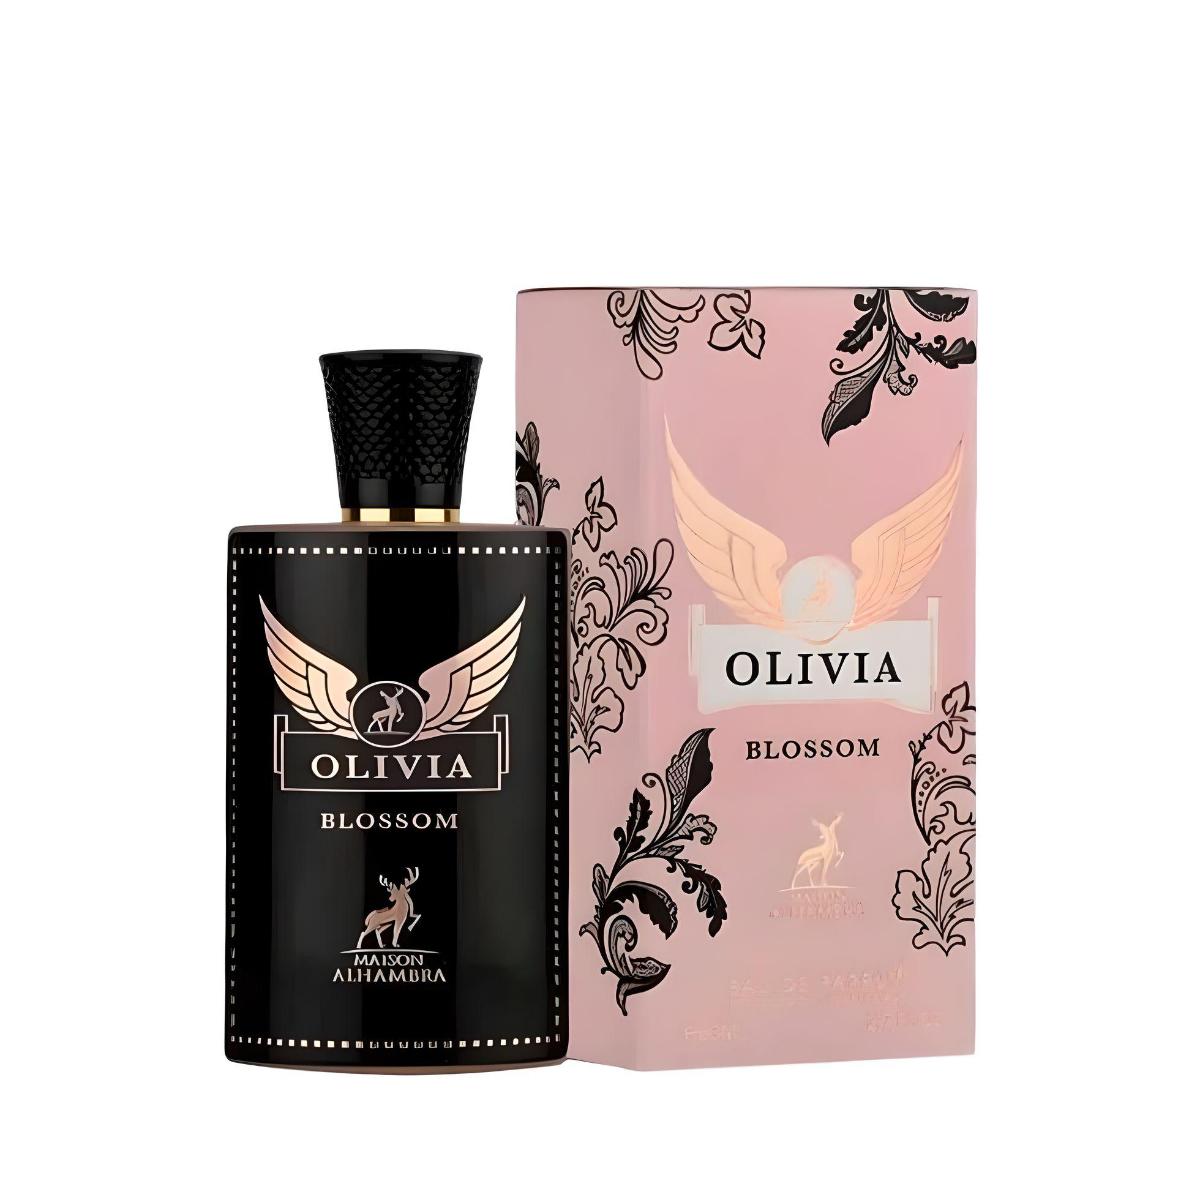 Olivia Blossom Perfume Eau De Parfum By Maison Alhambra Lattafa (Inspired By Olympea Blossom)